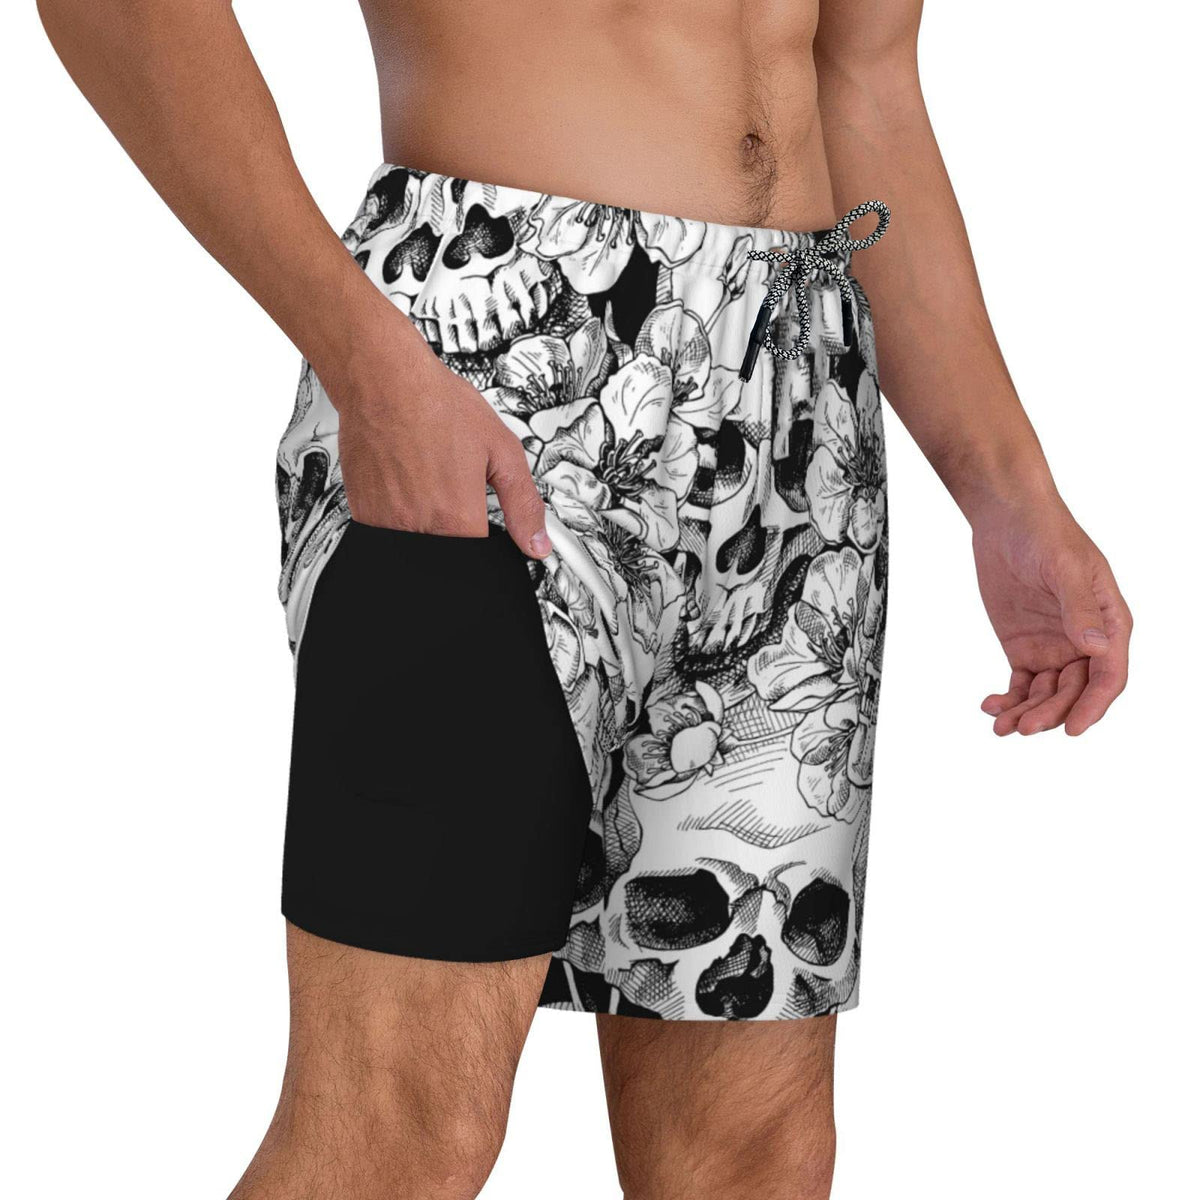 Men's 9" Inseam Swim Trunks With Compression Liner Quick Dry Swim Bathing Suit - Skull